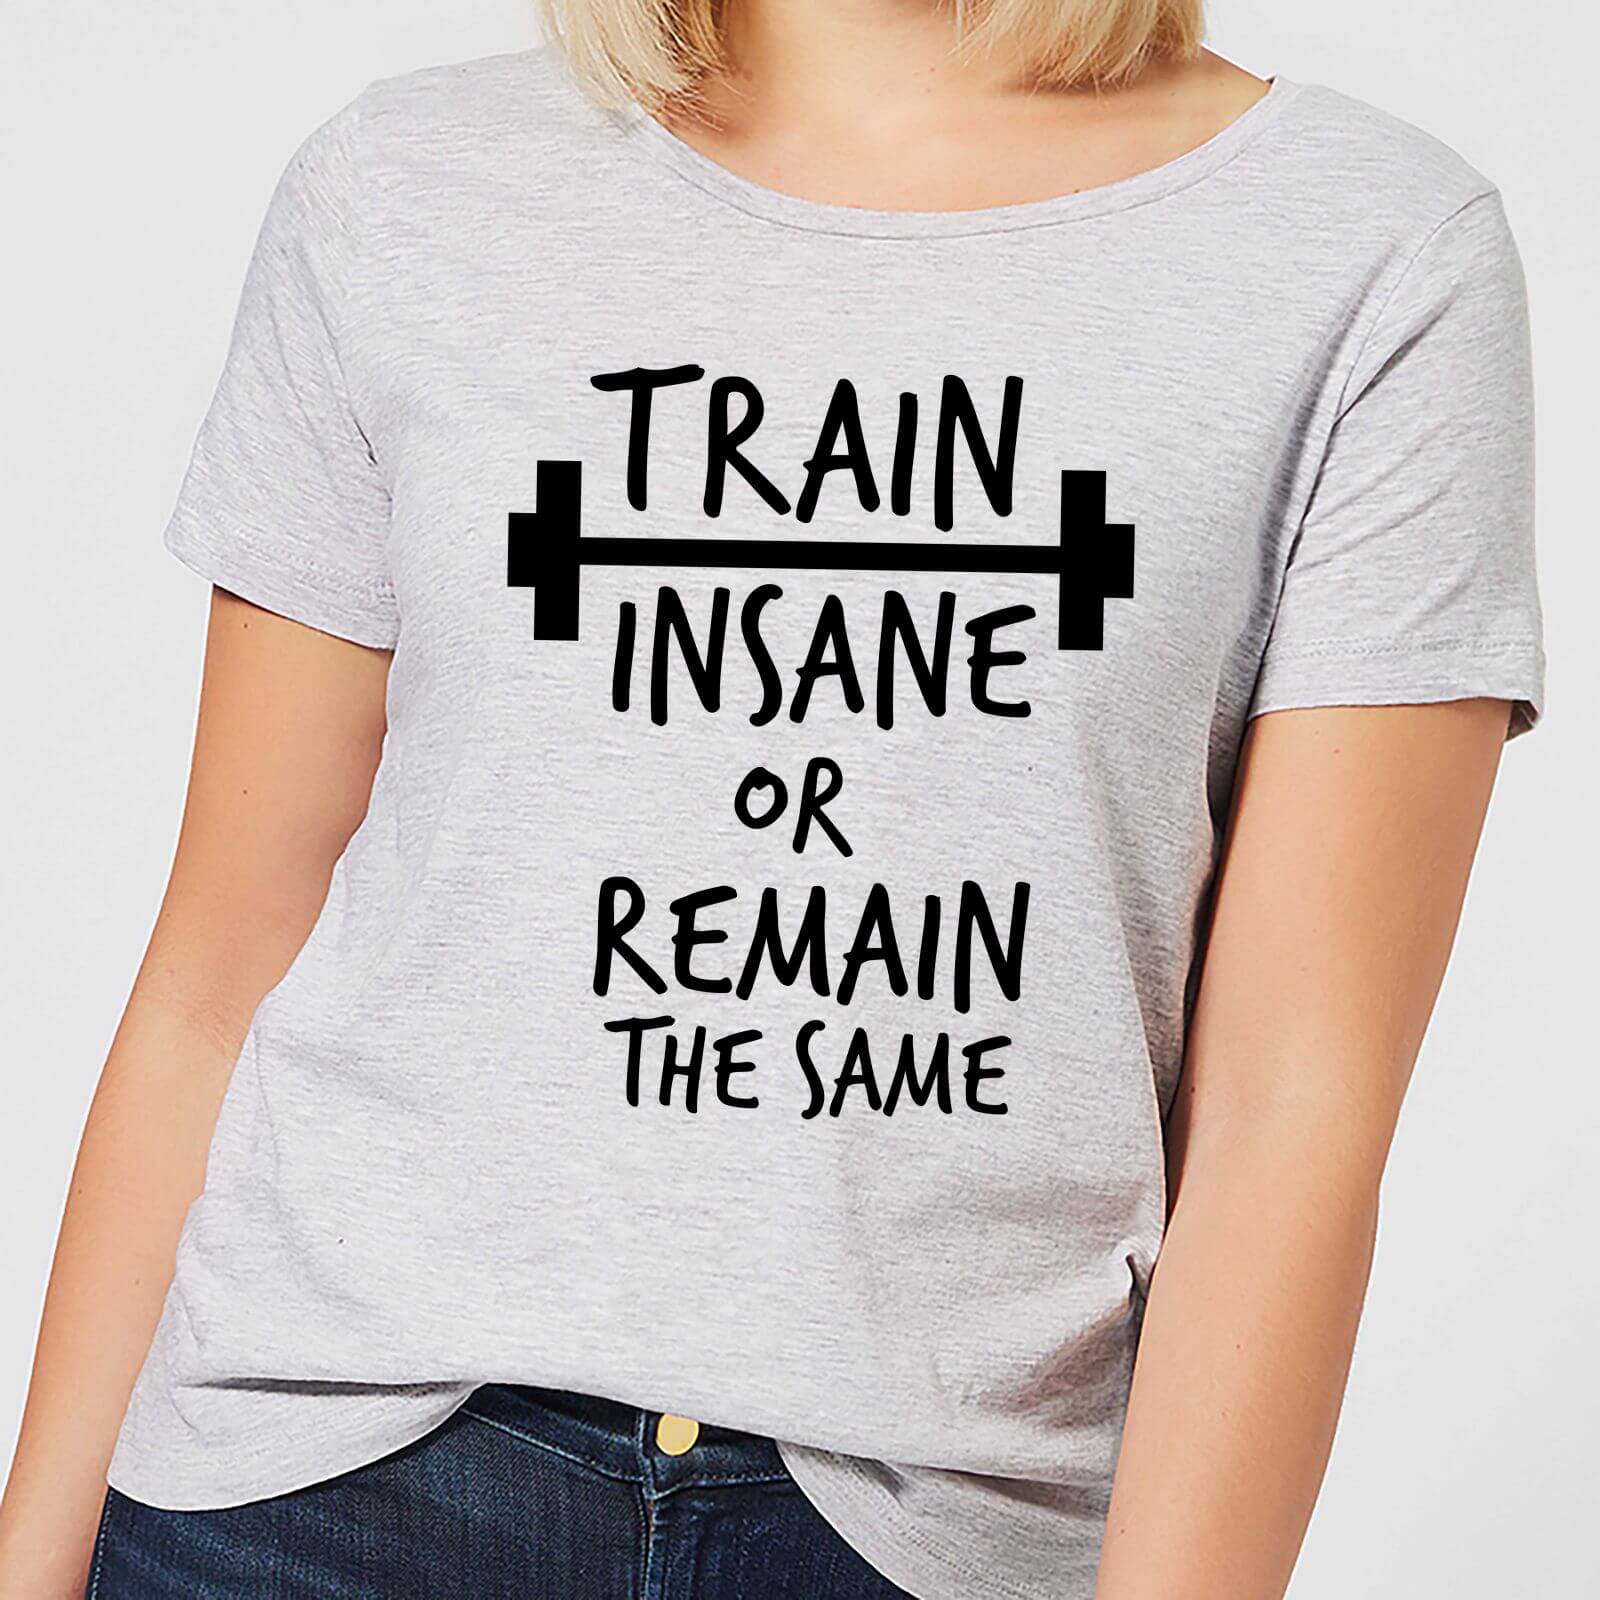 Train Insane or Remain the Same Women's T-Shirt - Grey - M - Grey